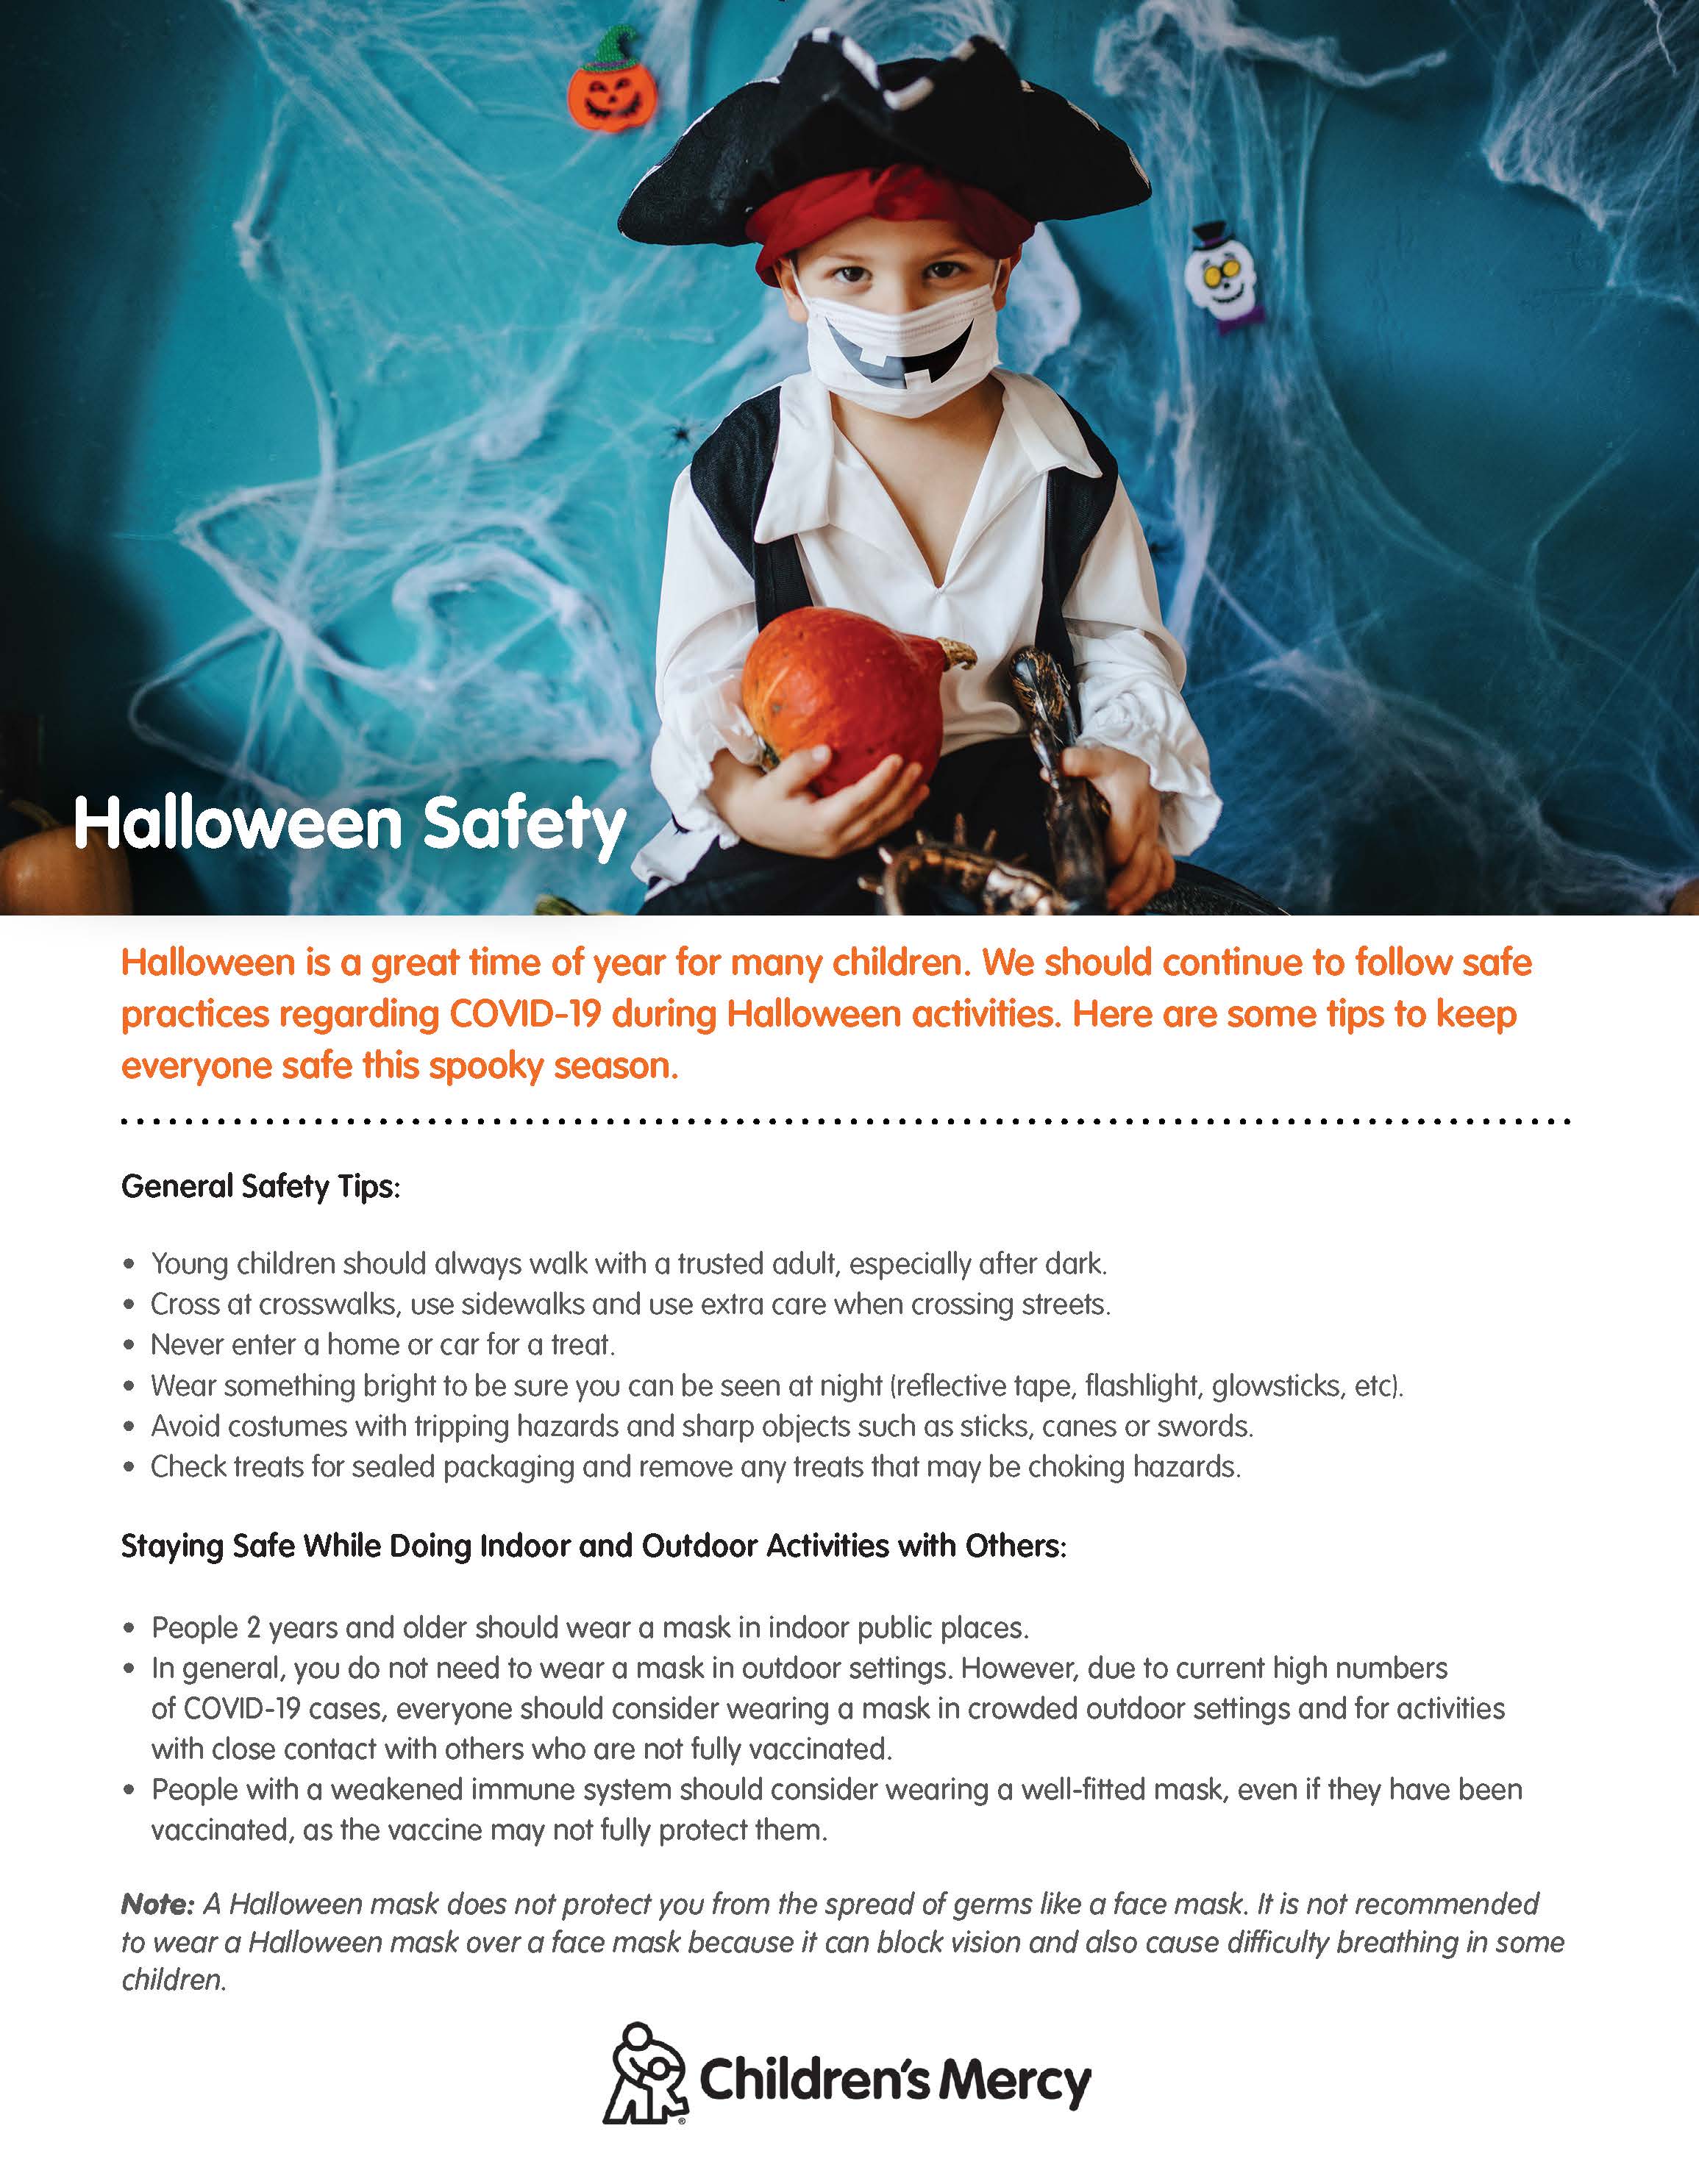 Halloween Safety Tips.jpg